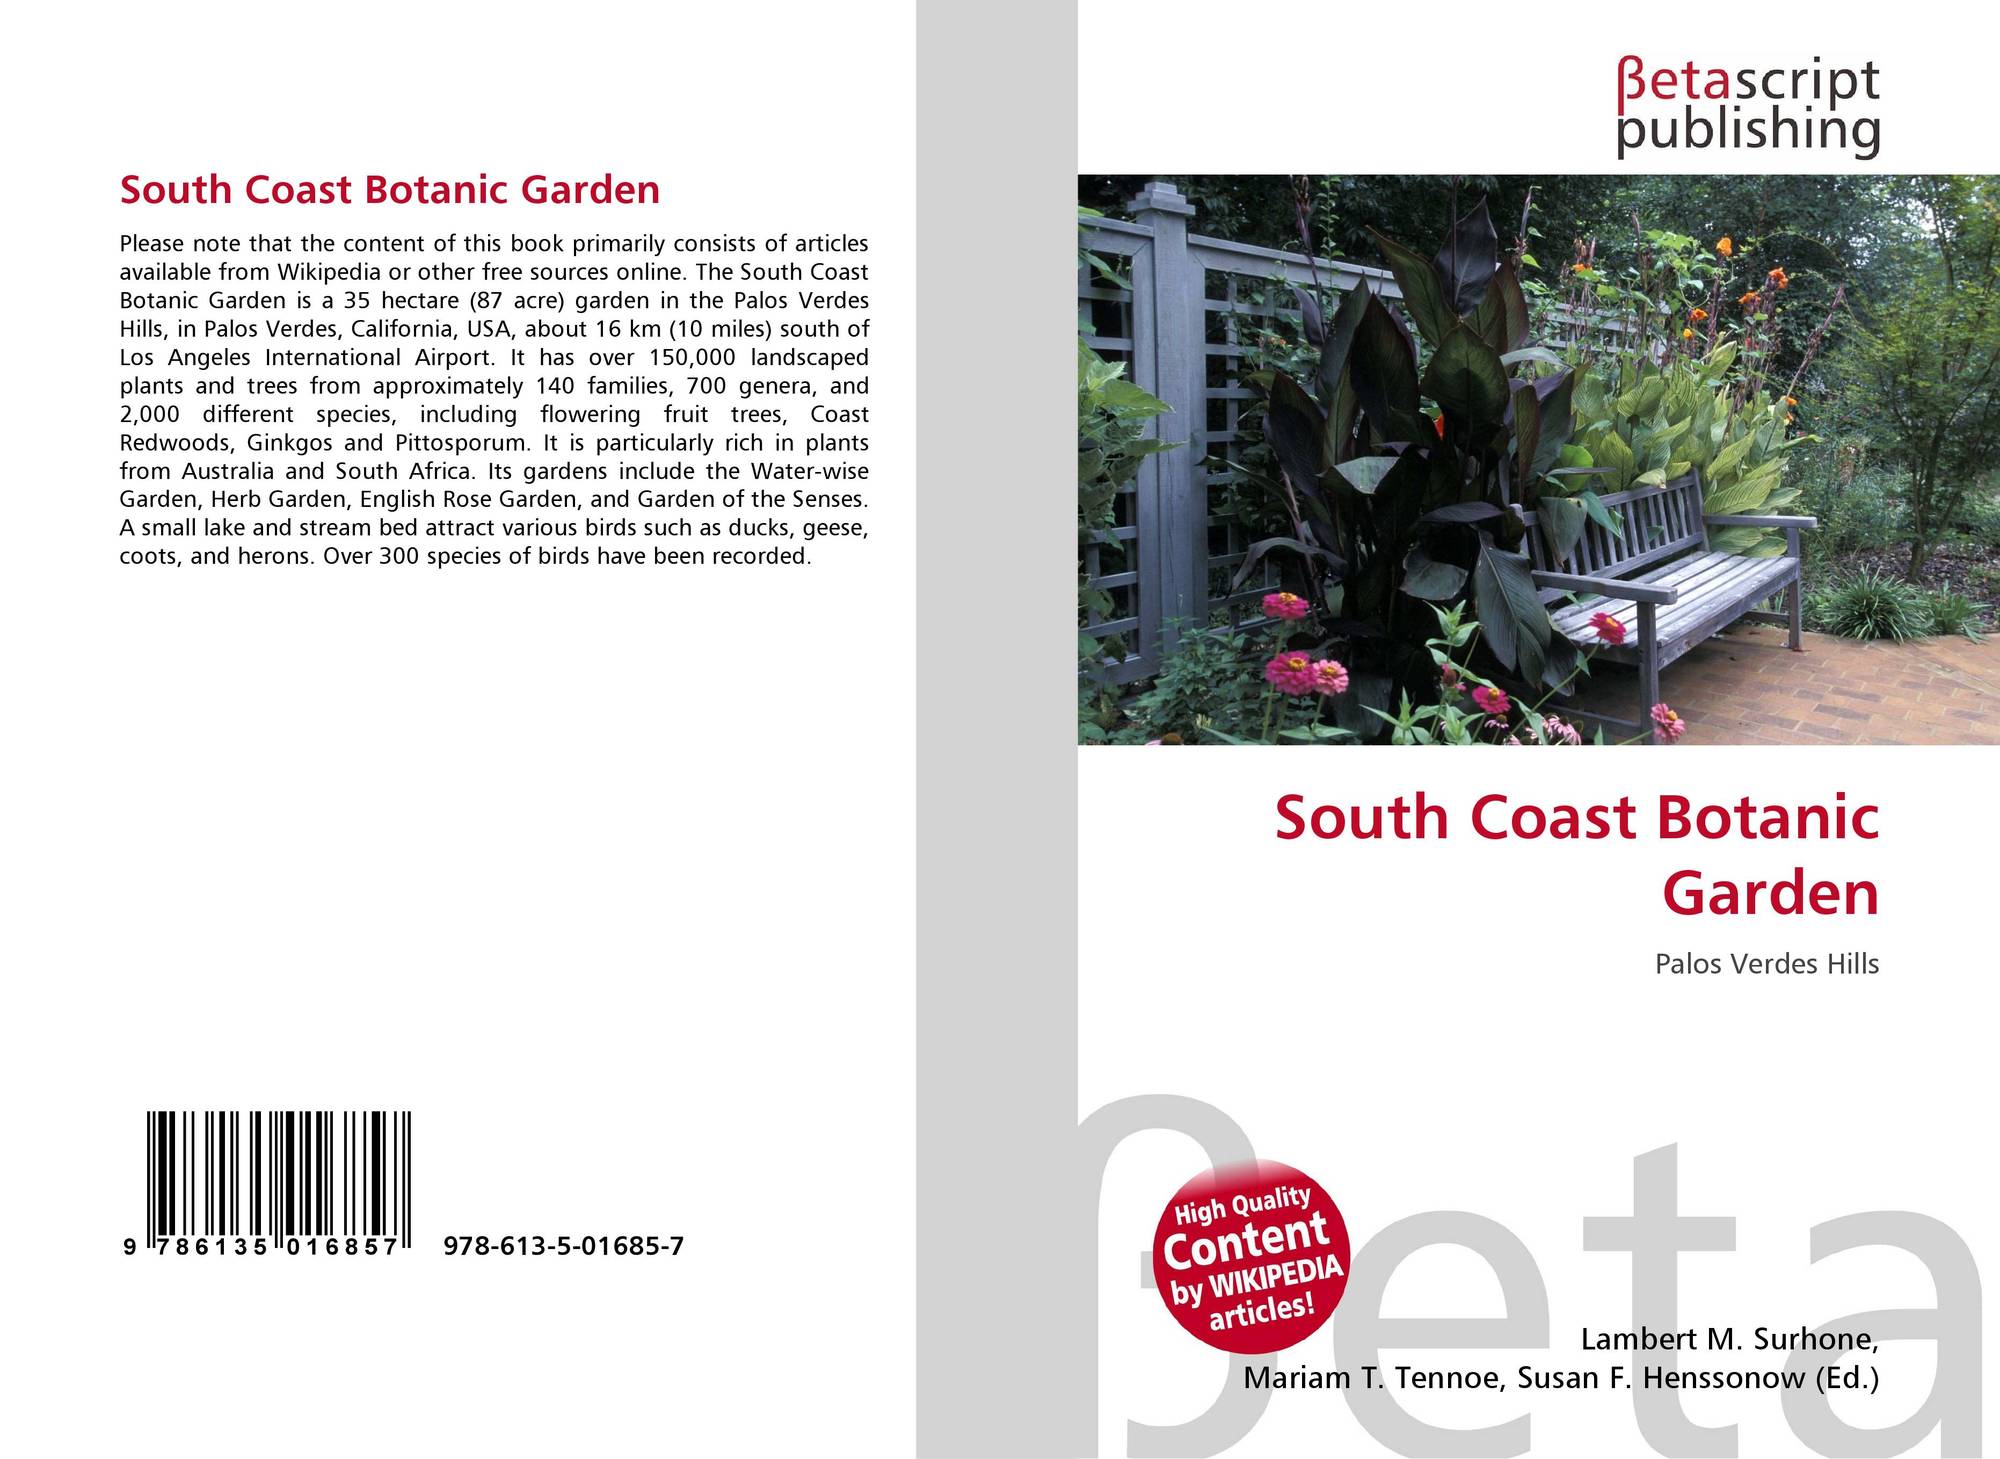 South Coast Botanic Garden 978 613 5 01685 7 6135016857